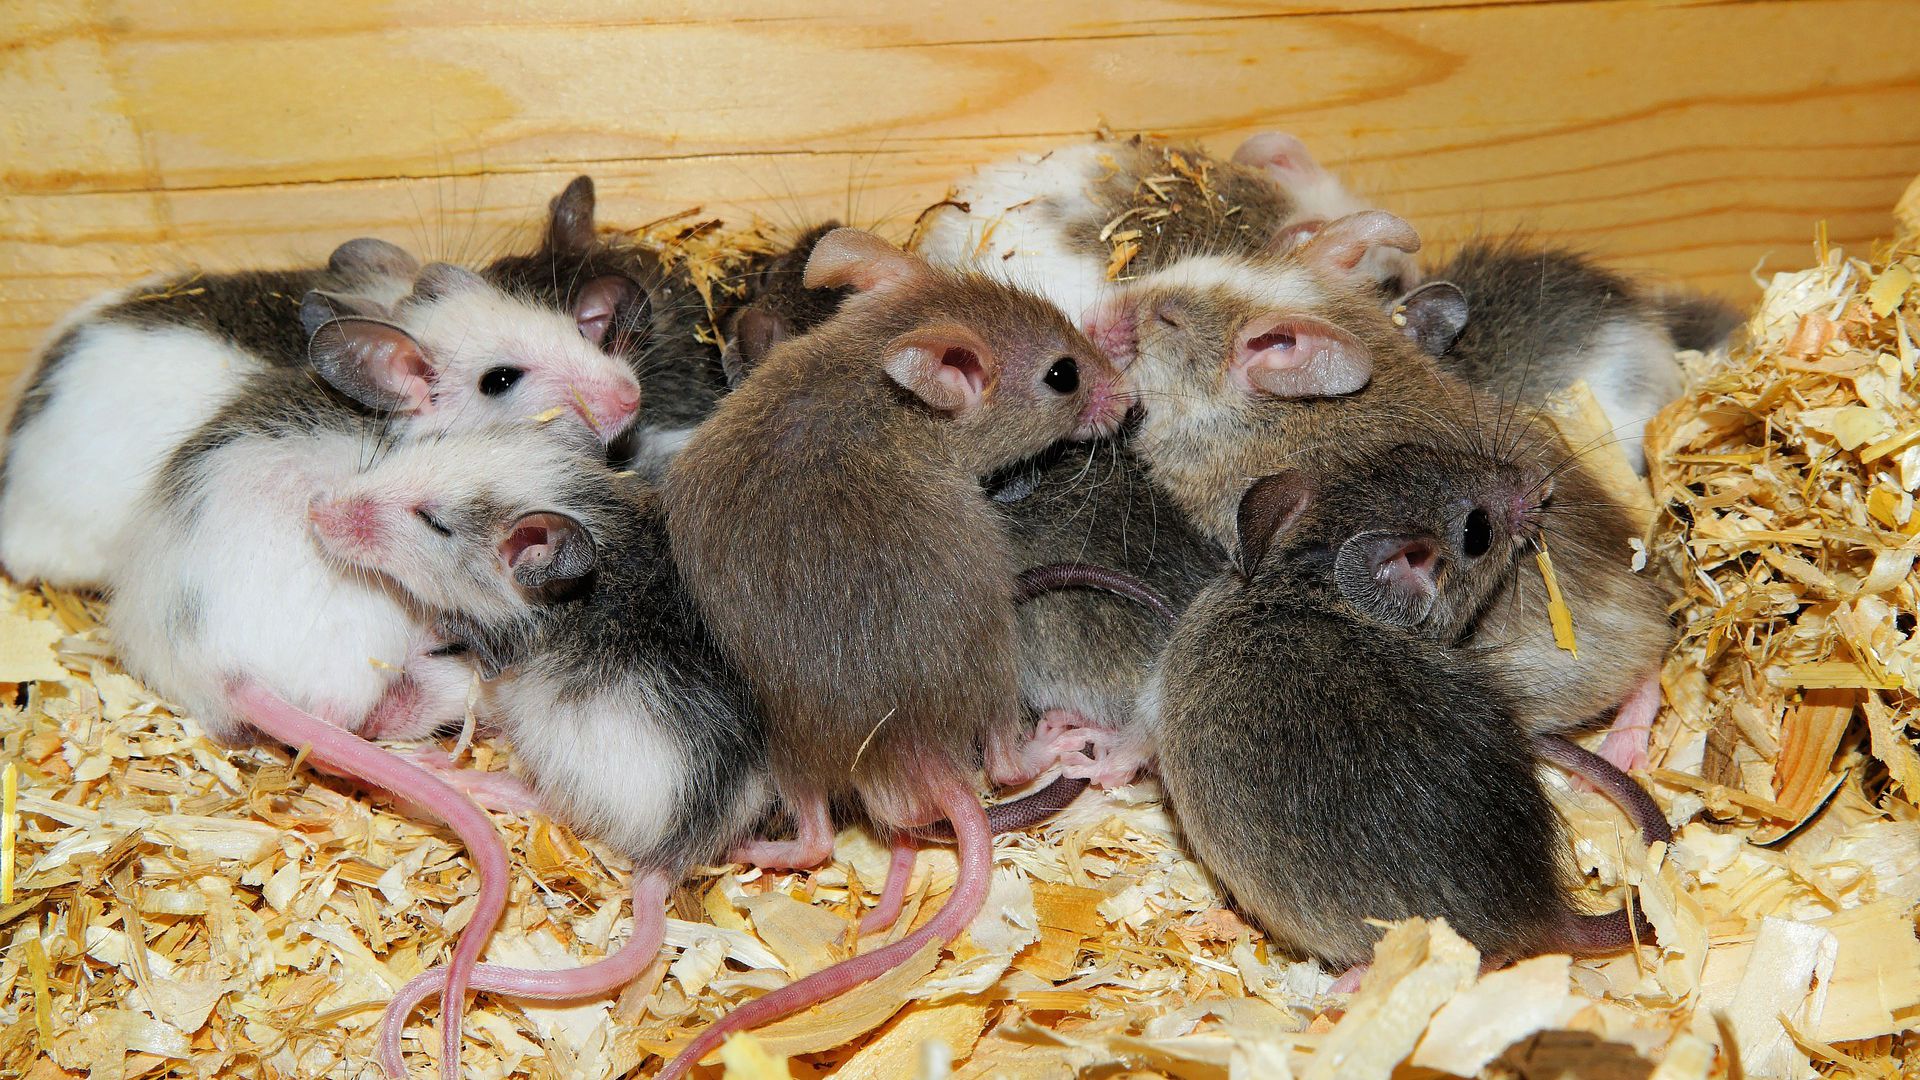 Espécies de Ratos - Conheça os Principais Tipos de Ratos